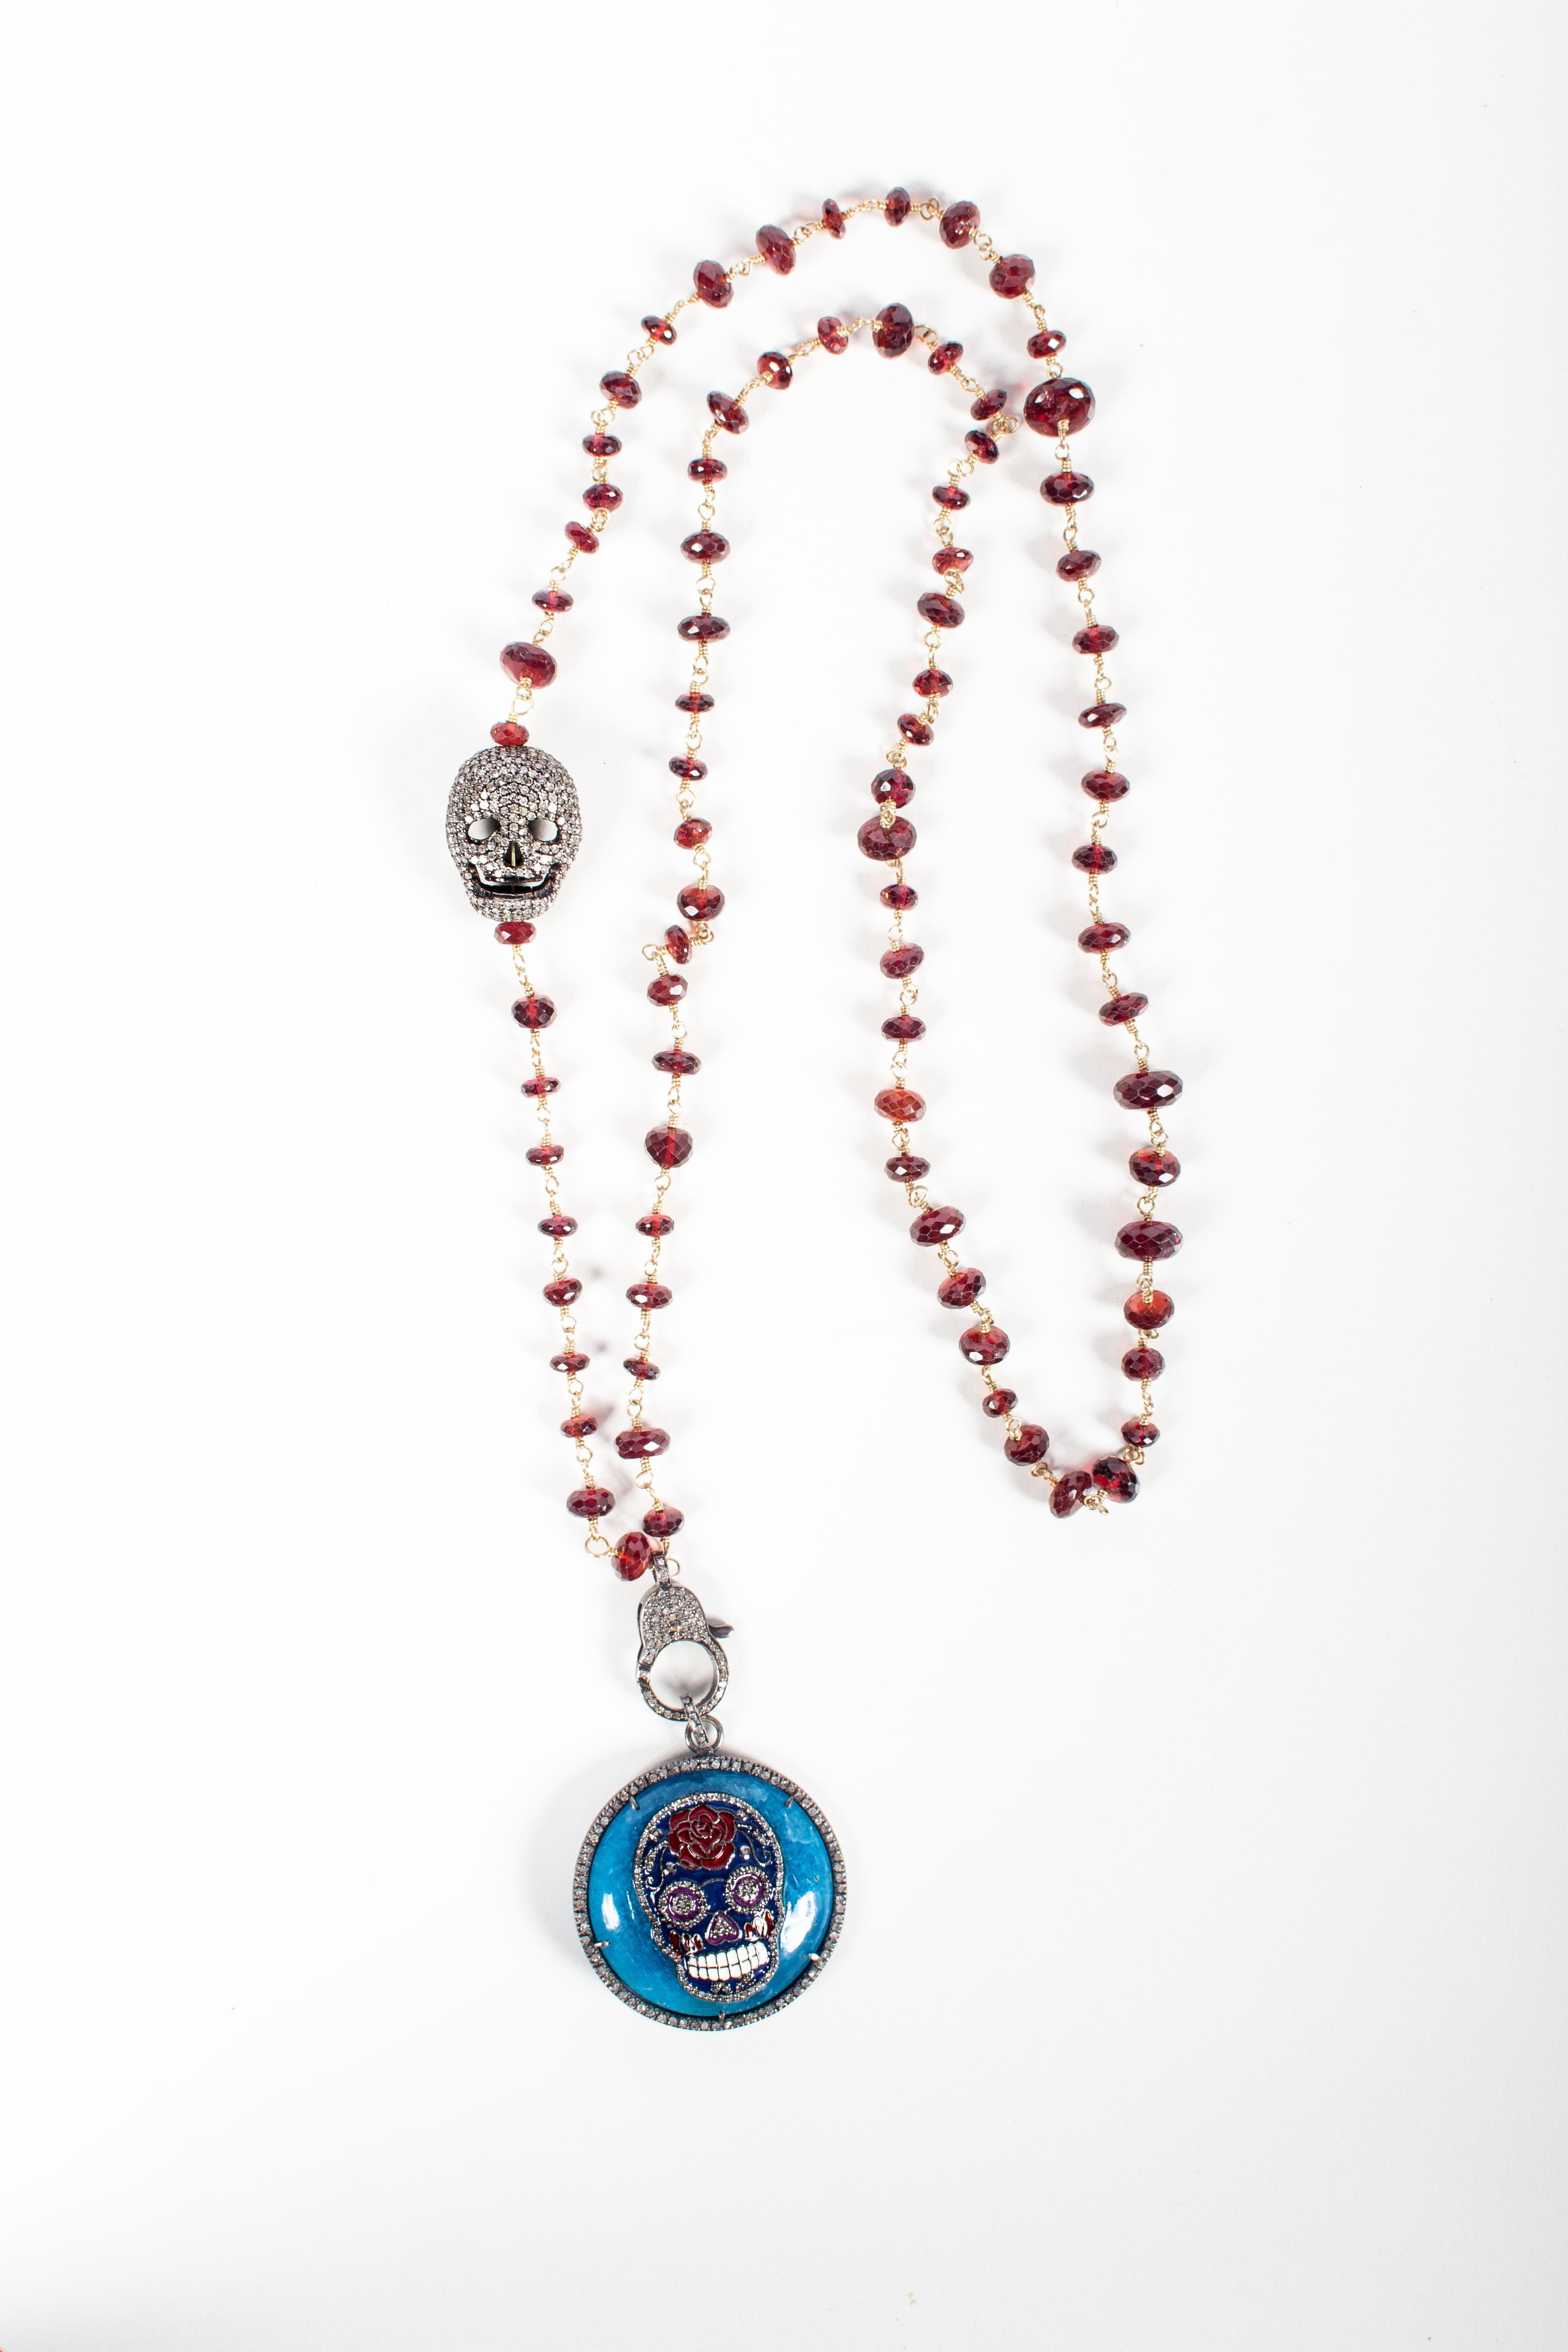 Contemporary Clarissa Bronfman Garnet, Diamond, Enamel, Silver Skull Beaded Necklace